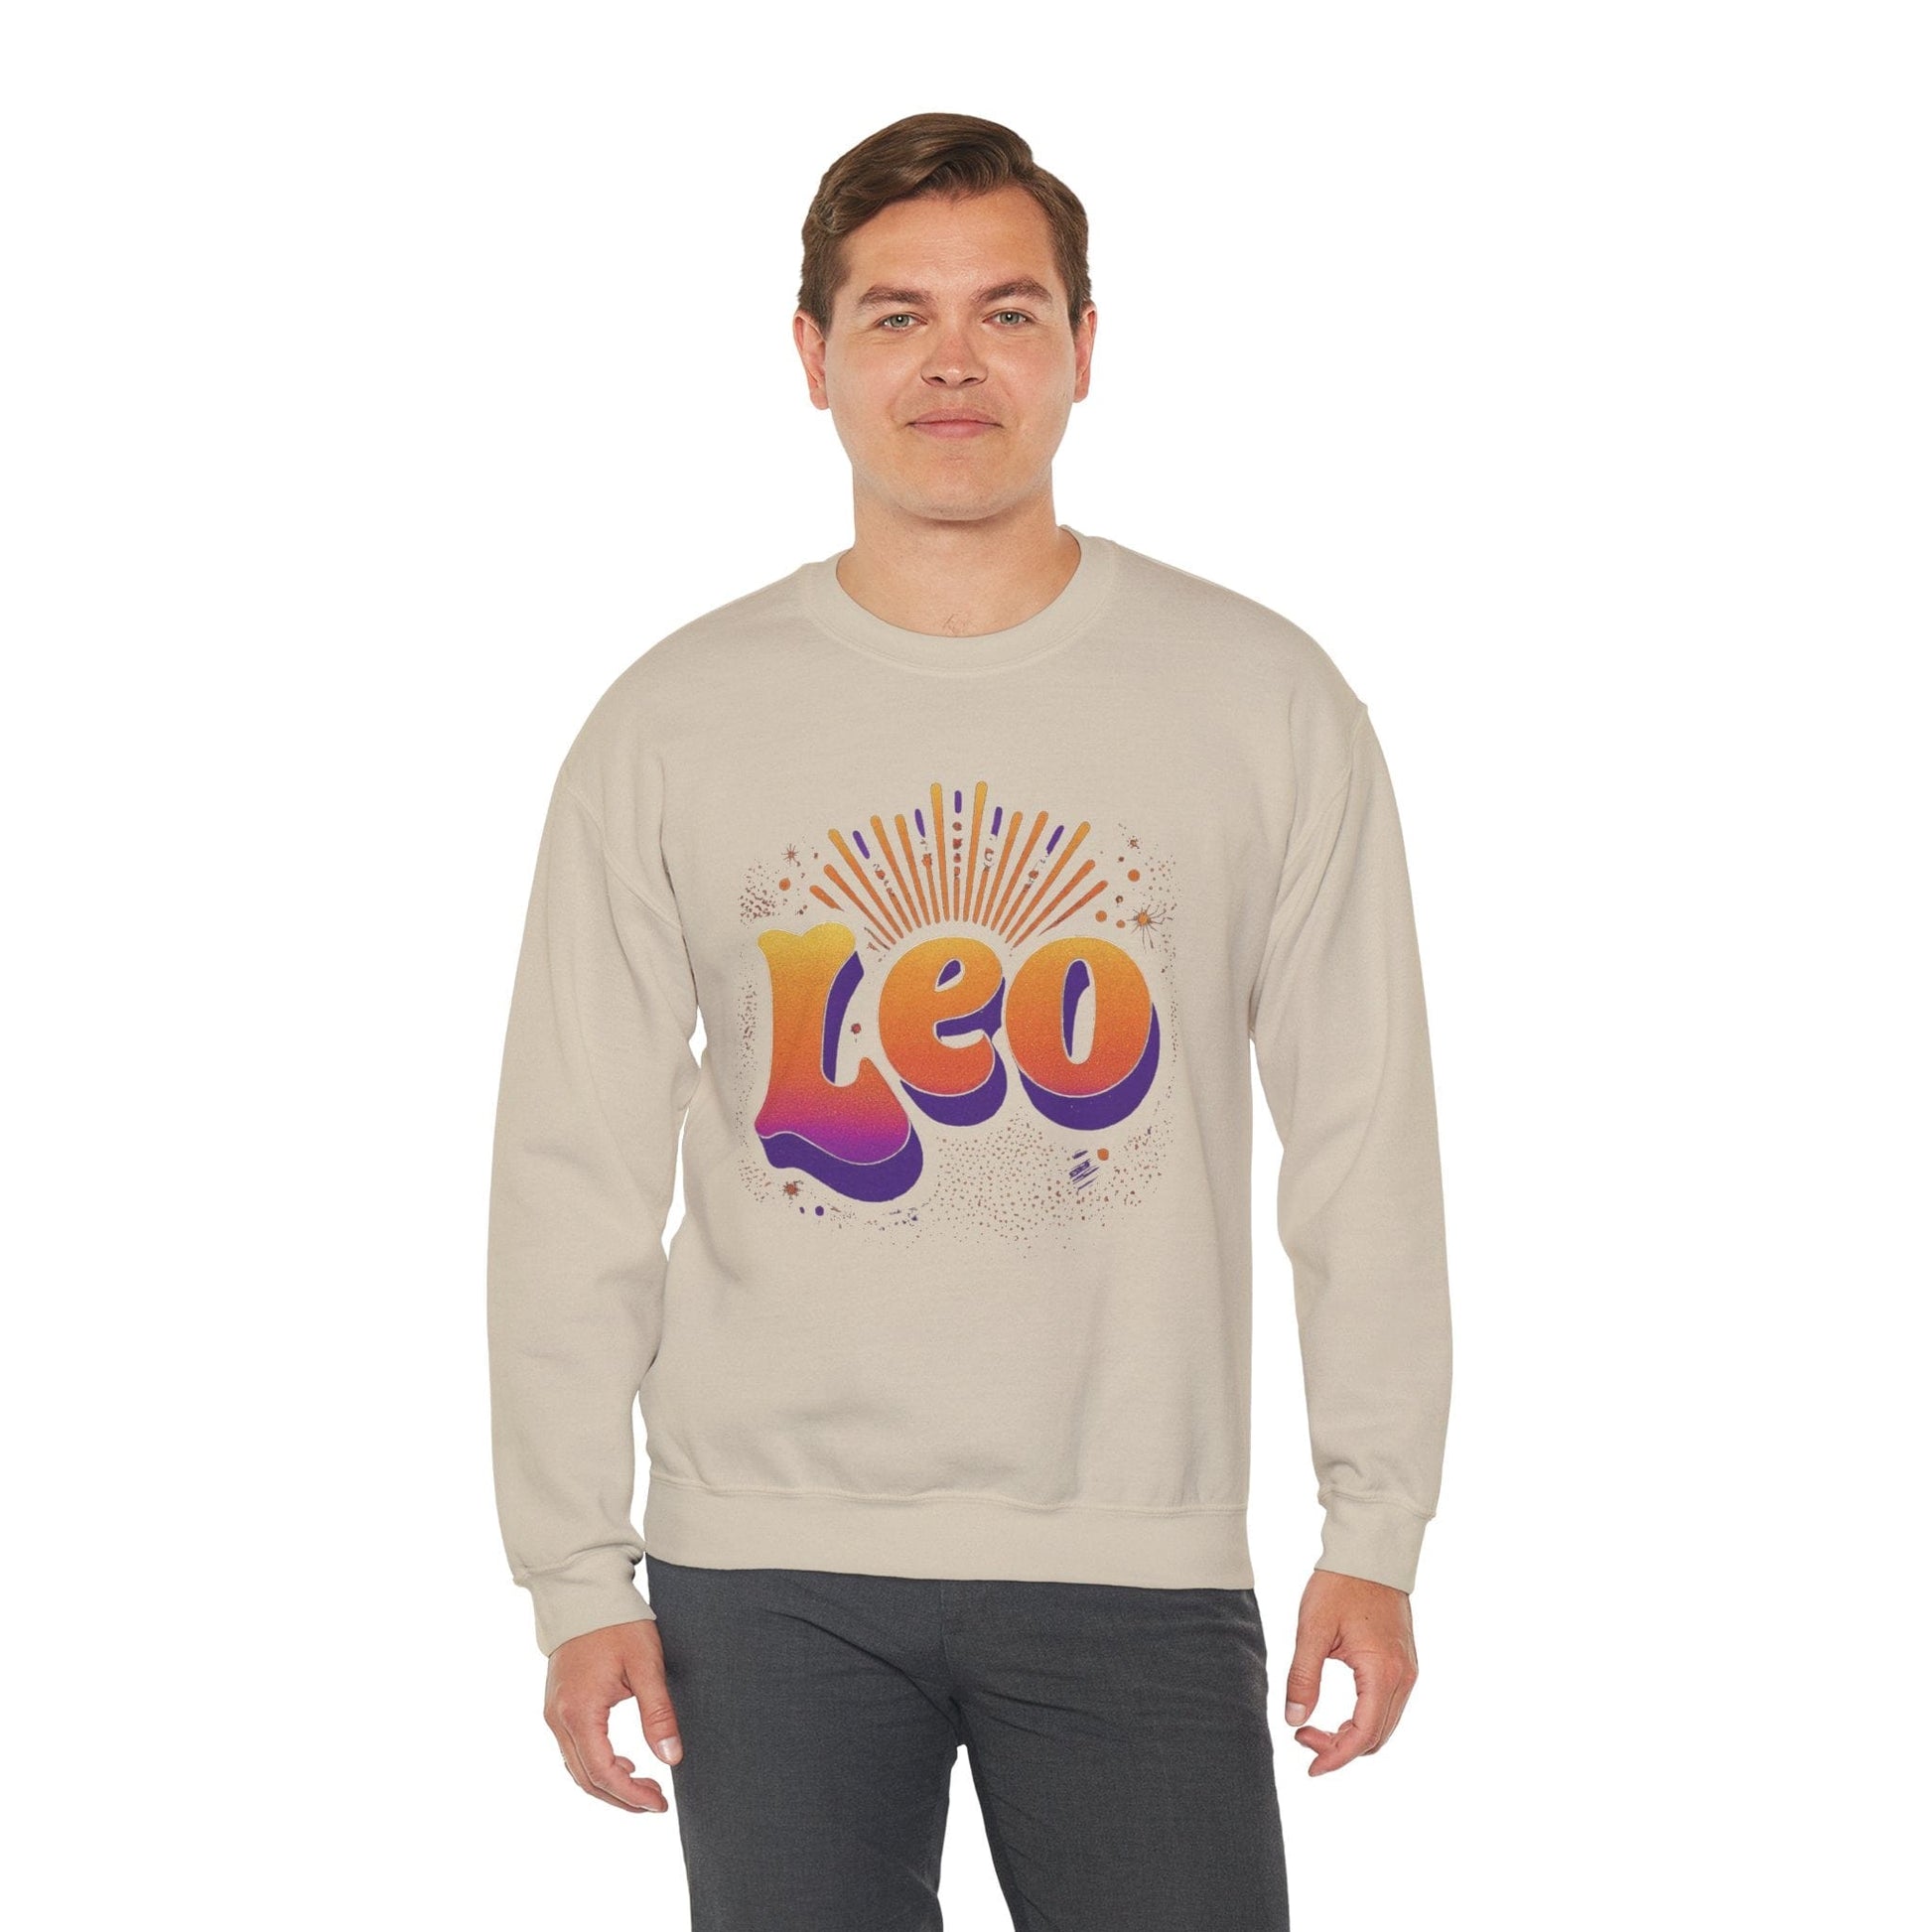 Sweatshirt Groovy 70s Leo Soft Sweater